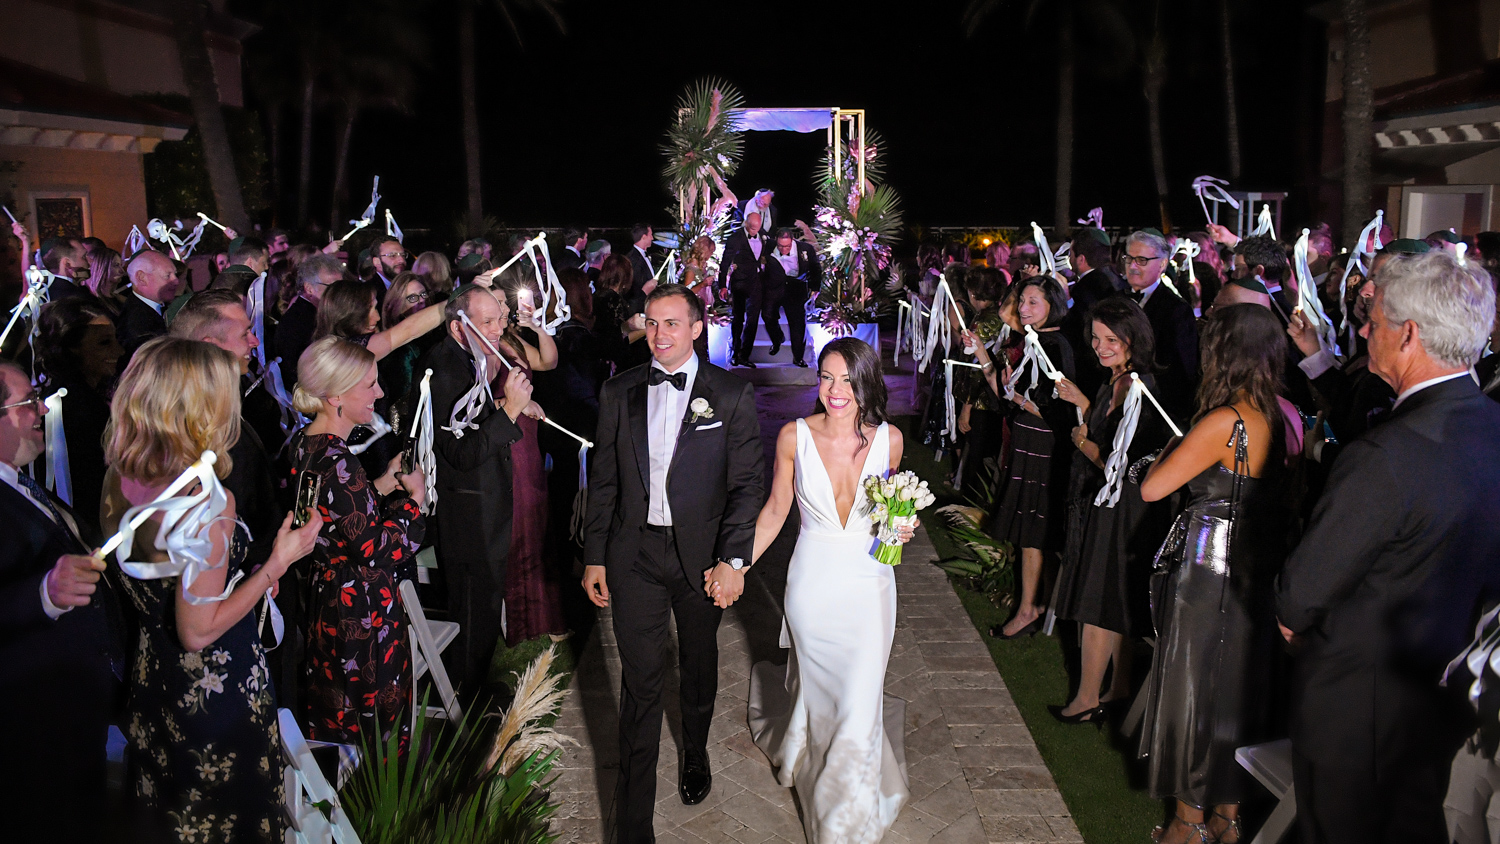 Luxury Miami destination Wedding Photography by Domino Arts